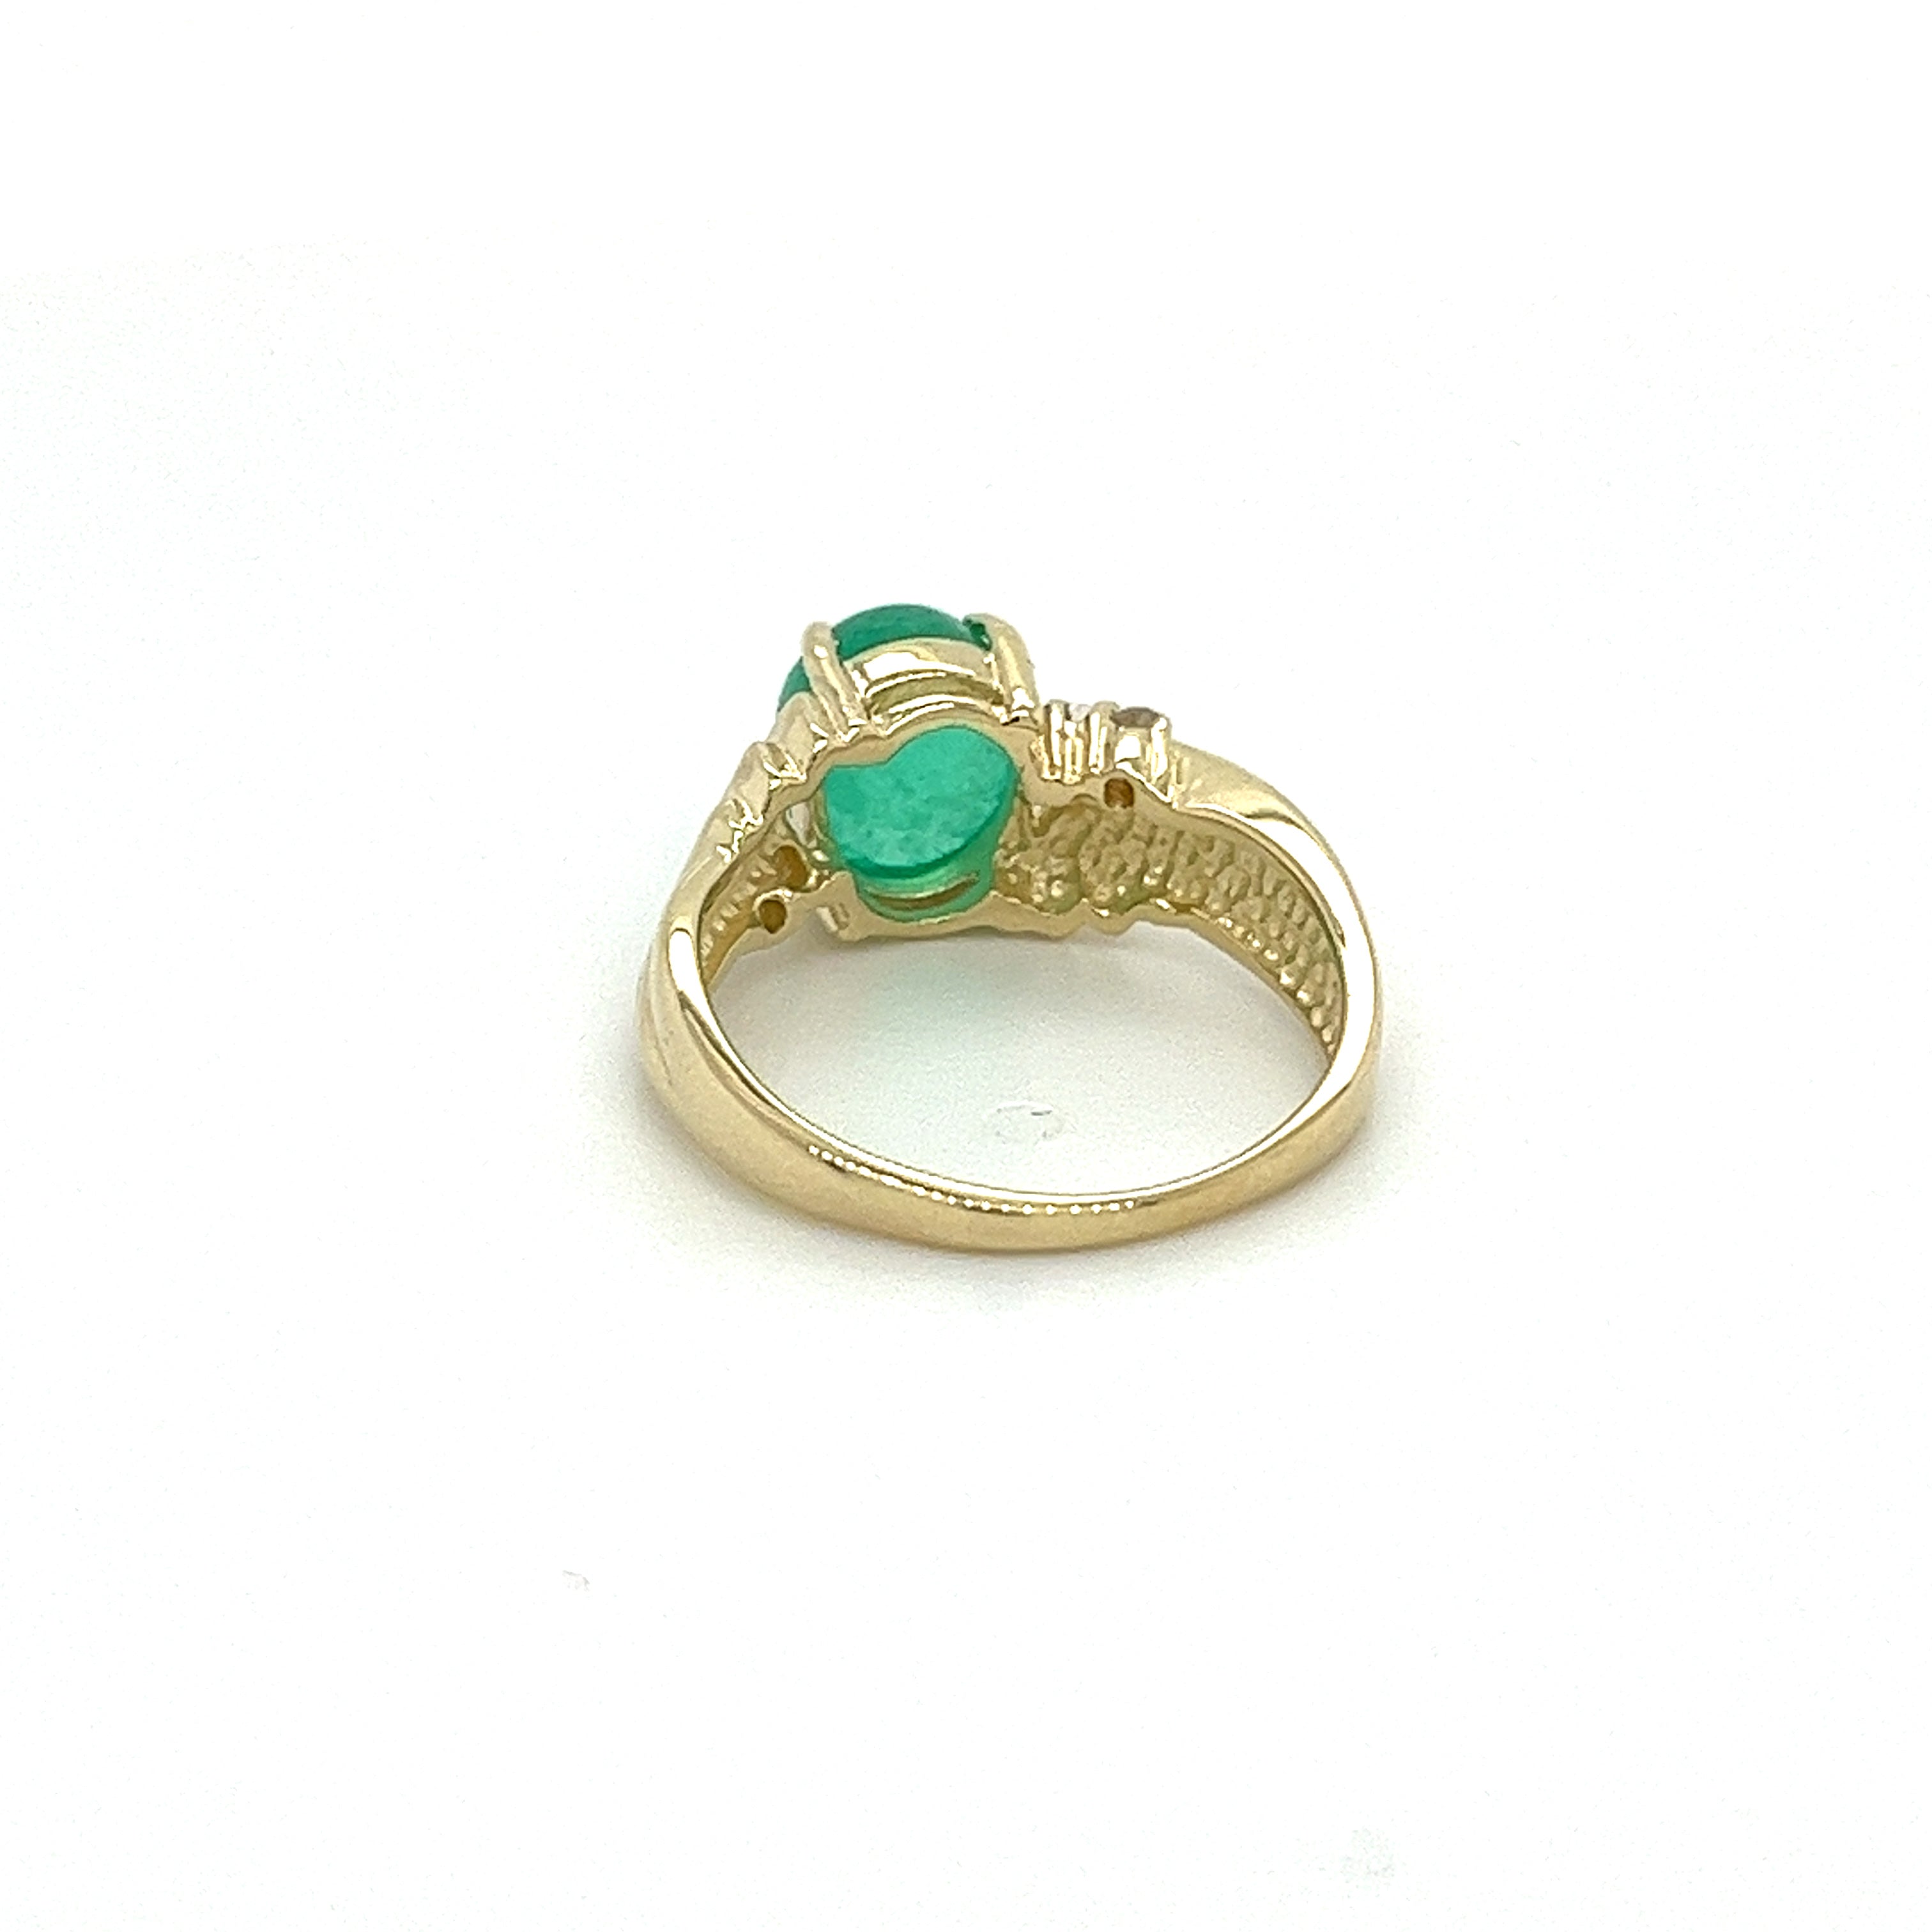 2-Carat-Cabochon-Cut-Natural-Emerald-Diamond-in-Textured-14K-Yellow-Gold-Ring-Rings-2.jpg